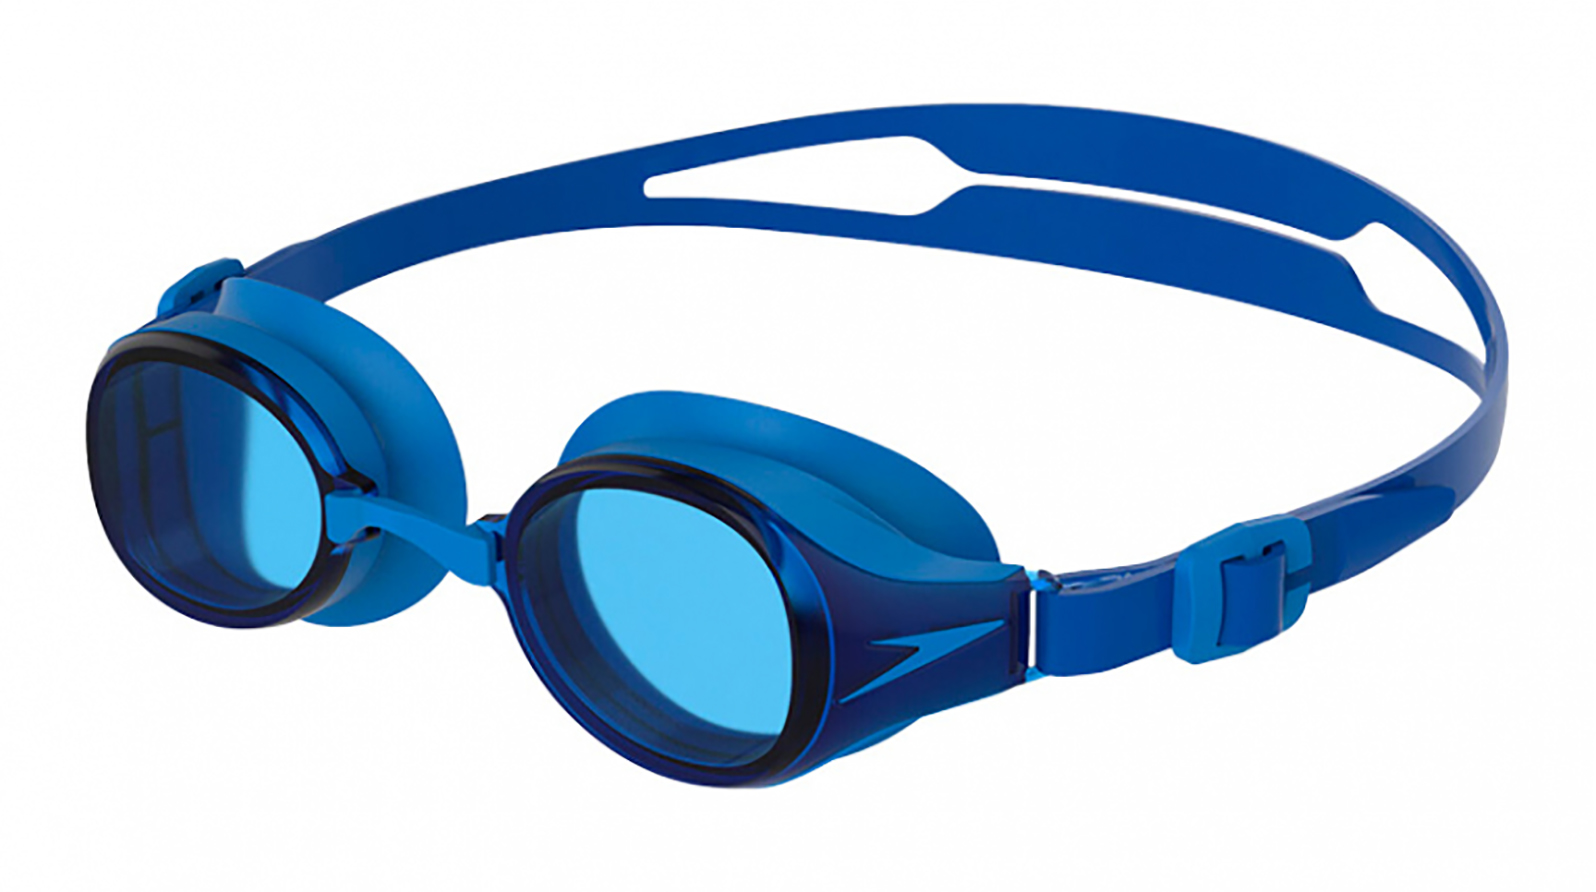 Speedo Очки для плавания Hydropure Optical F809 -4.5 speedo очки для плавания hydropure optical f809 5 5